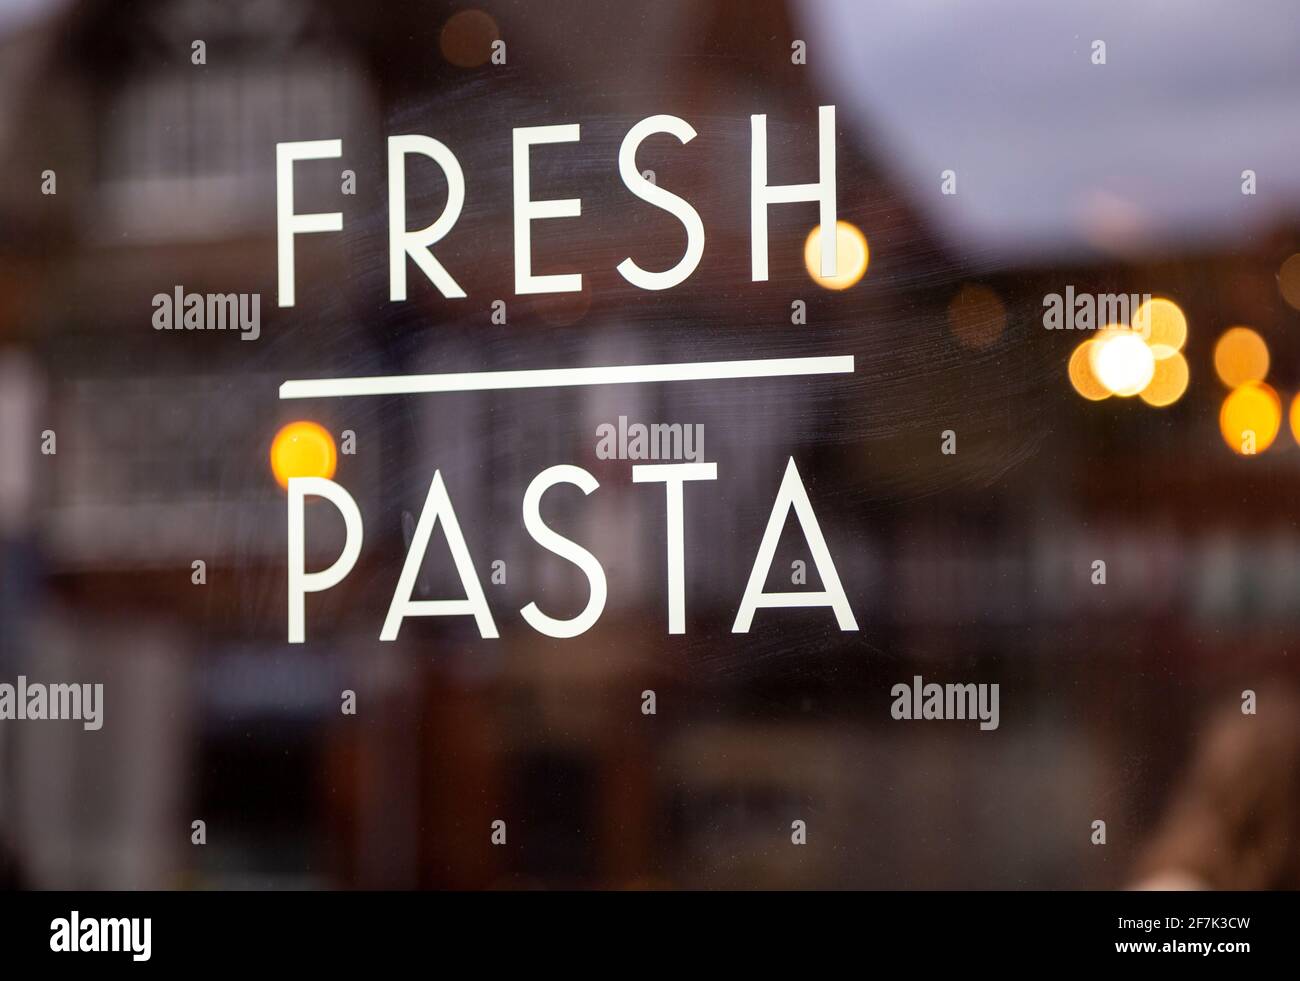 Fresh pasta sign in glass window of Italian restaurant blurred background some reflection, UK Stock Photo